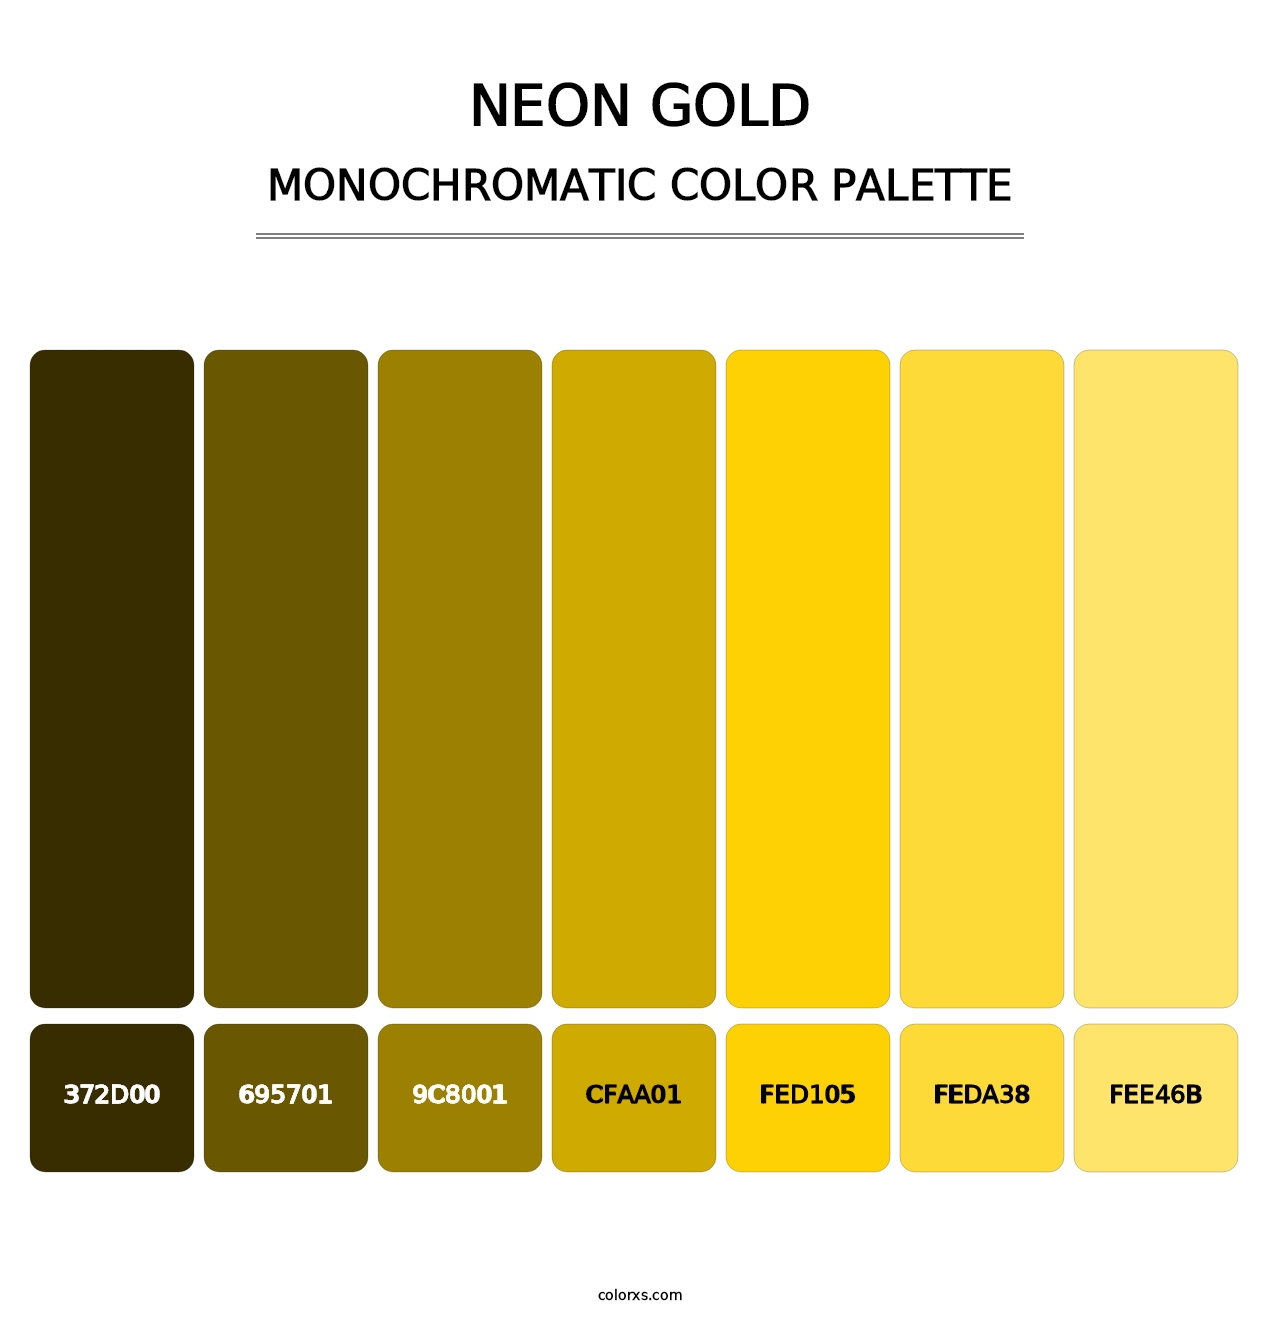 Neon Gold - Monochromatic Color Palette